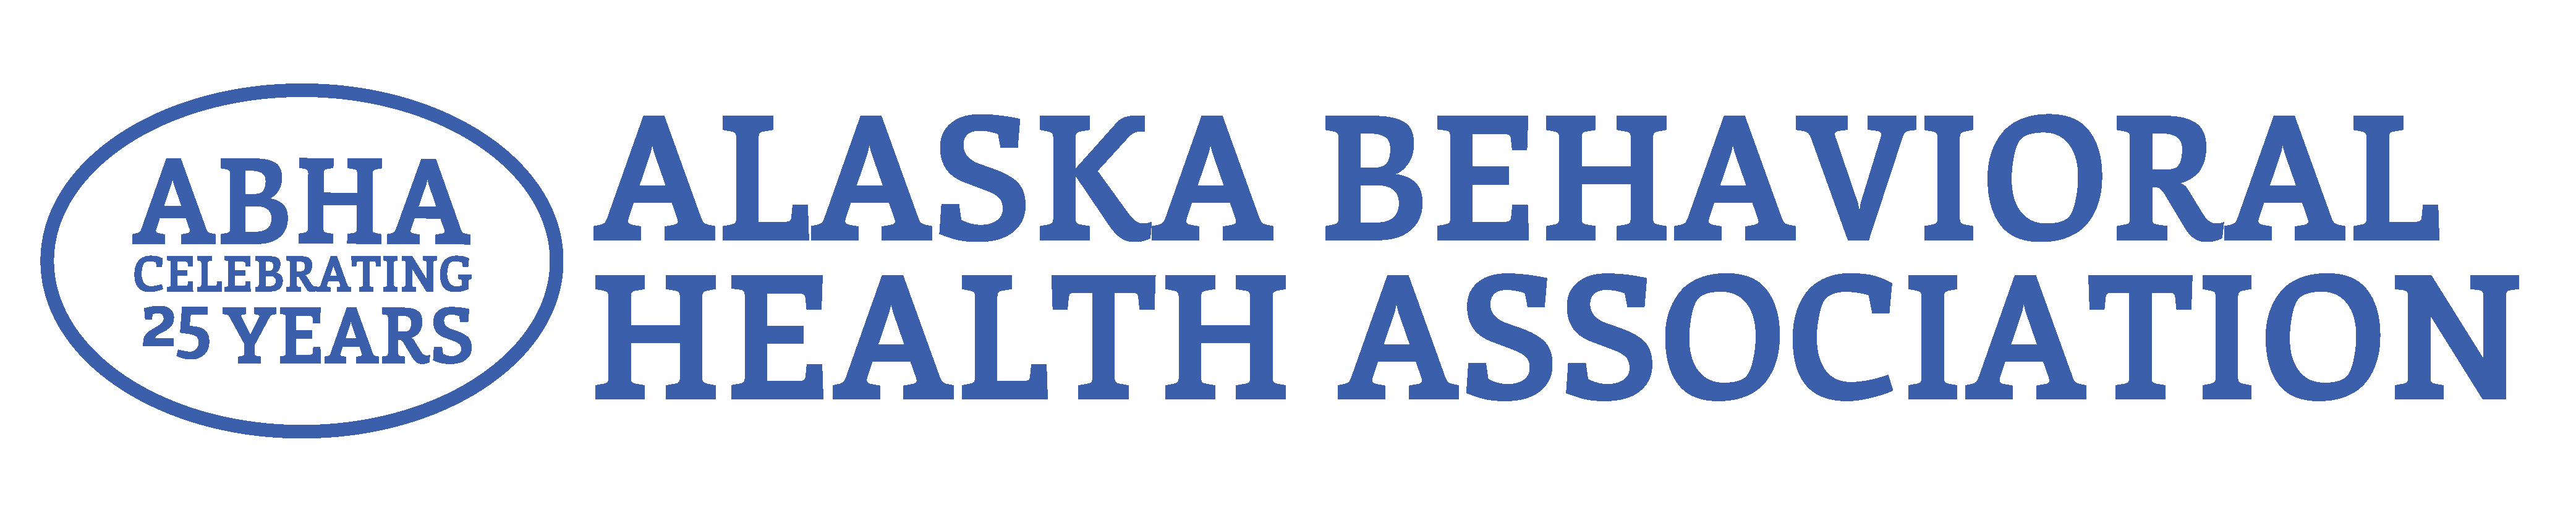 Alaska Behavioral Health Association